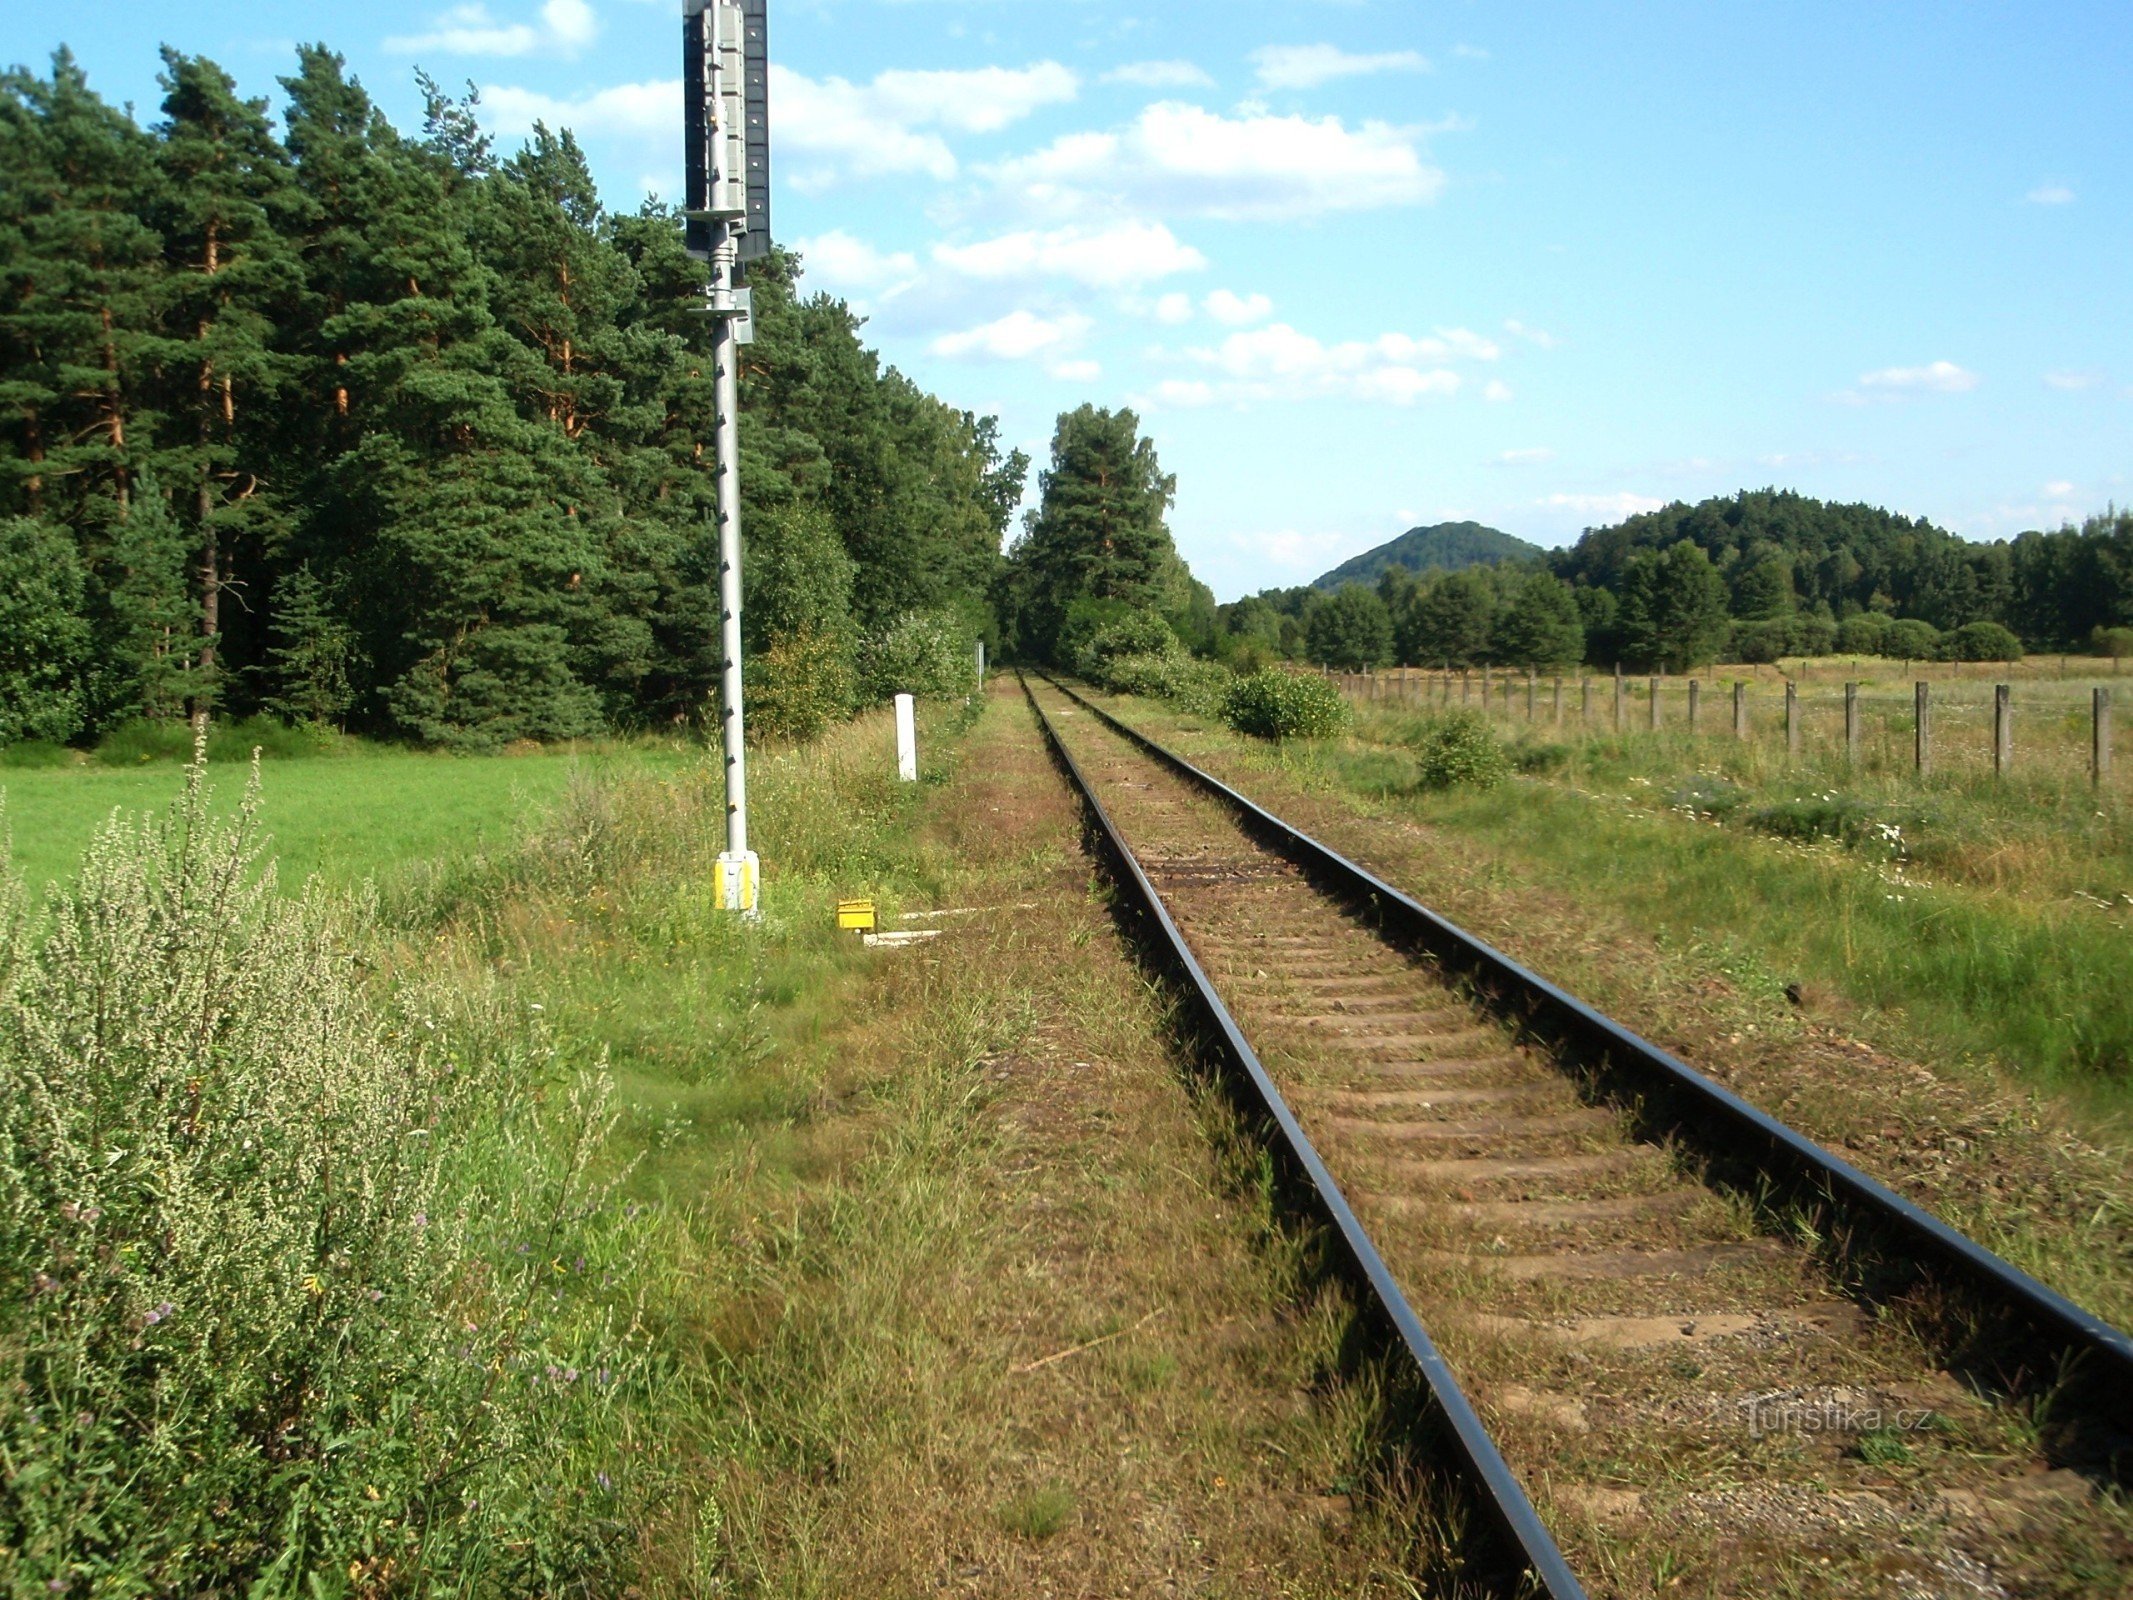 De Česká Lípa, pela linha azul, até Staré Splavy